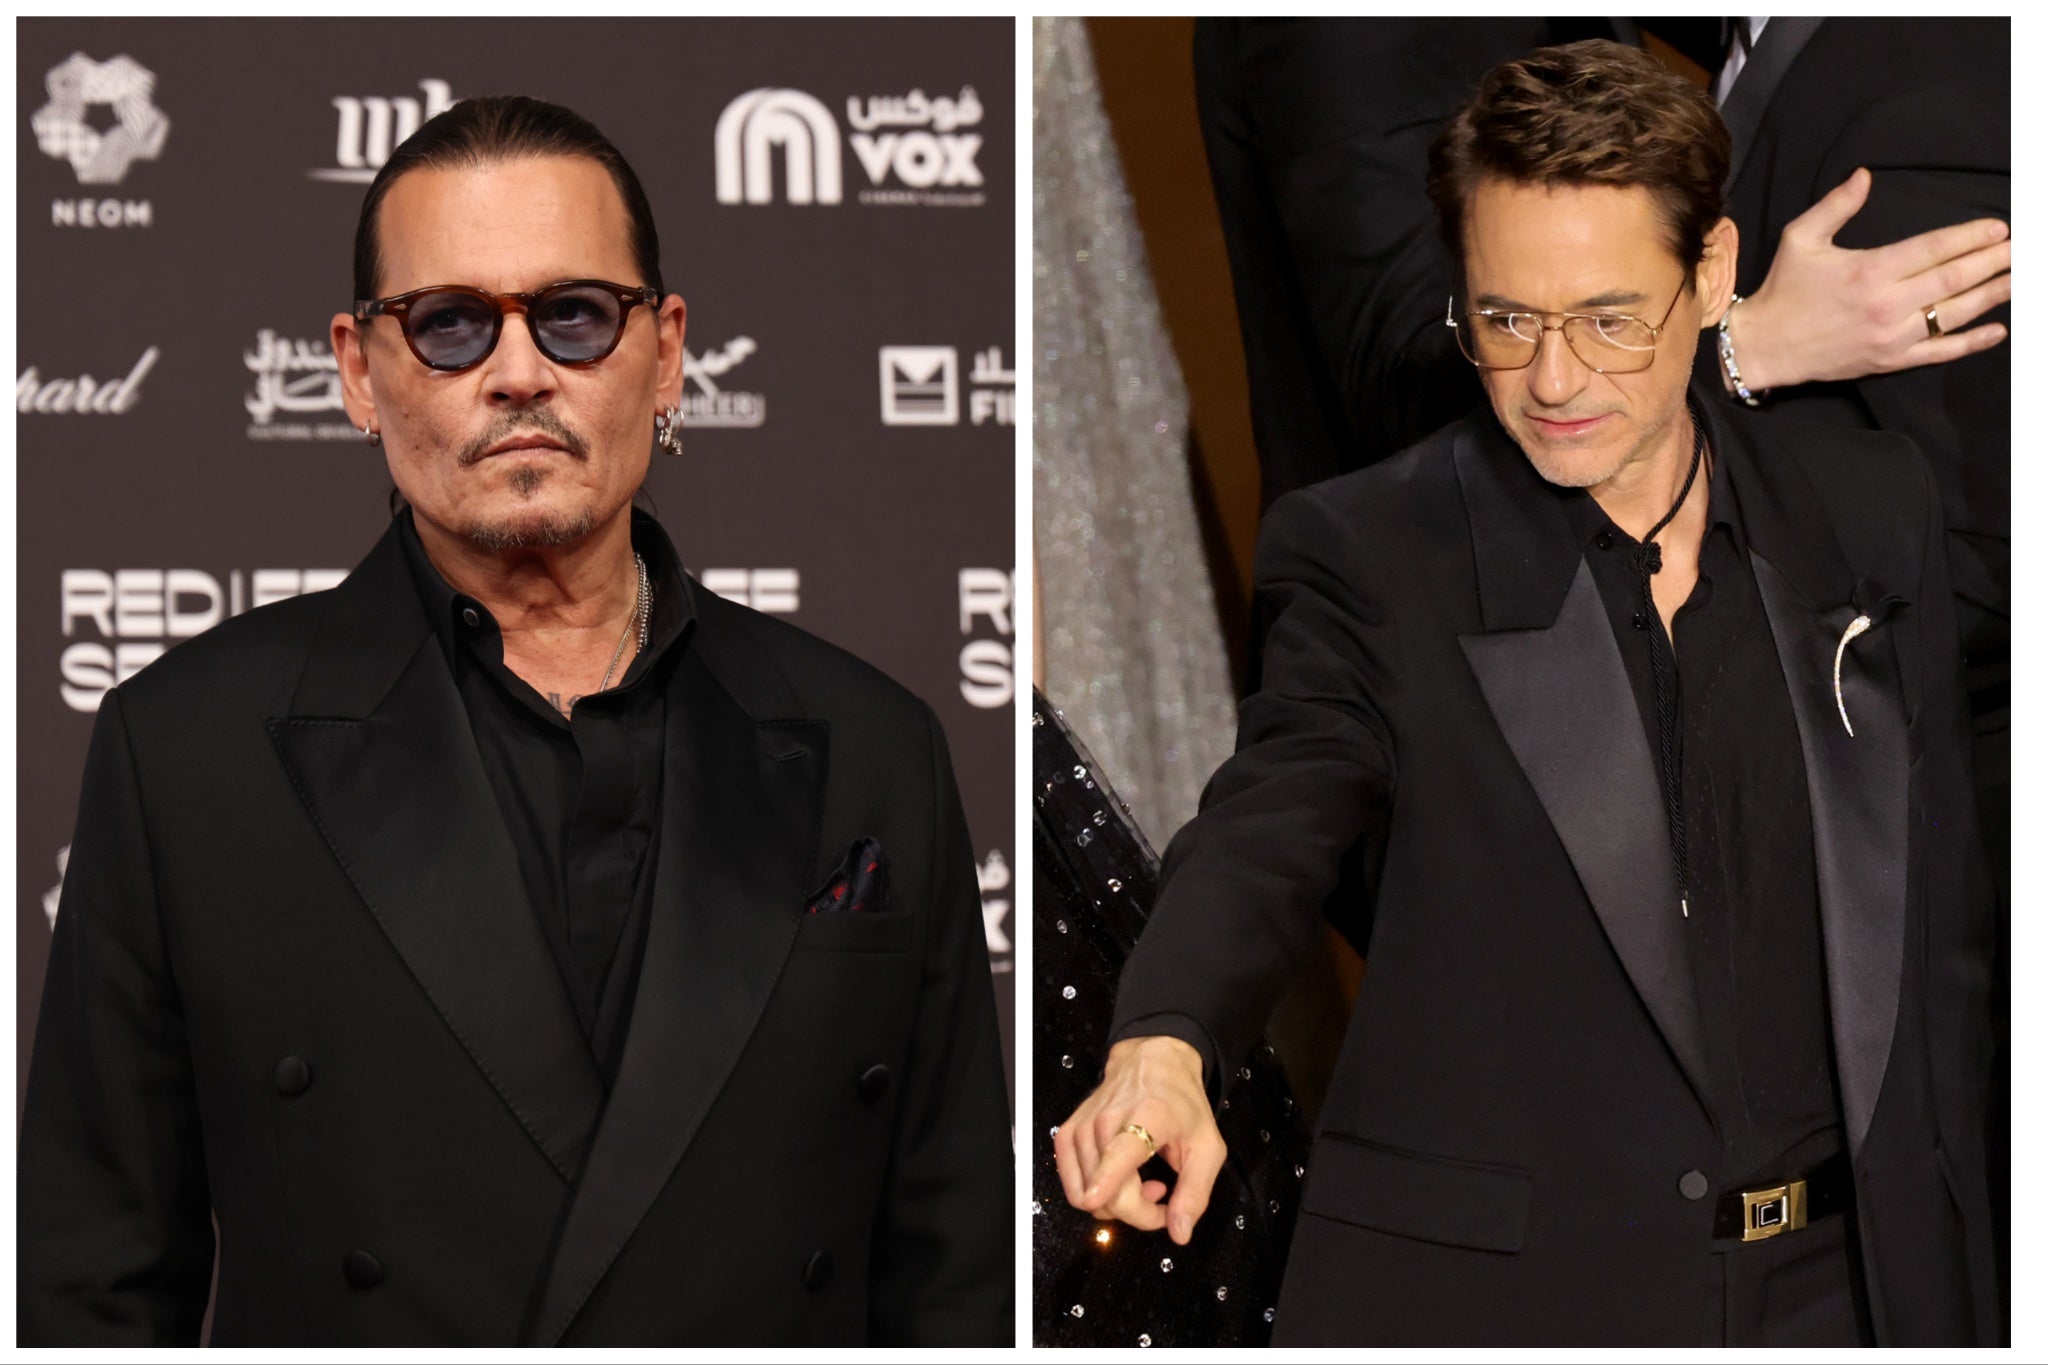 Johnny Depp (left) and Robert Downey Jr